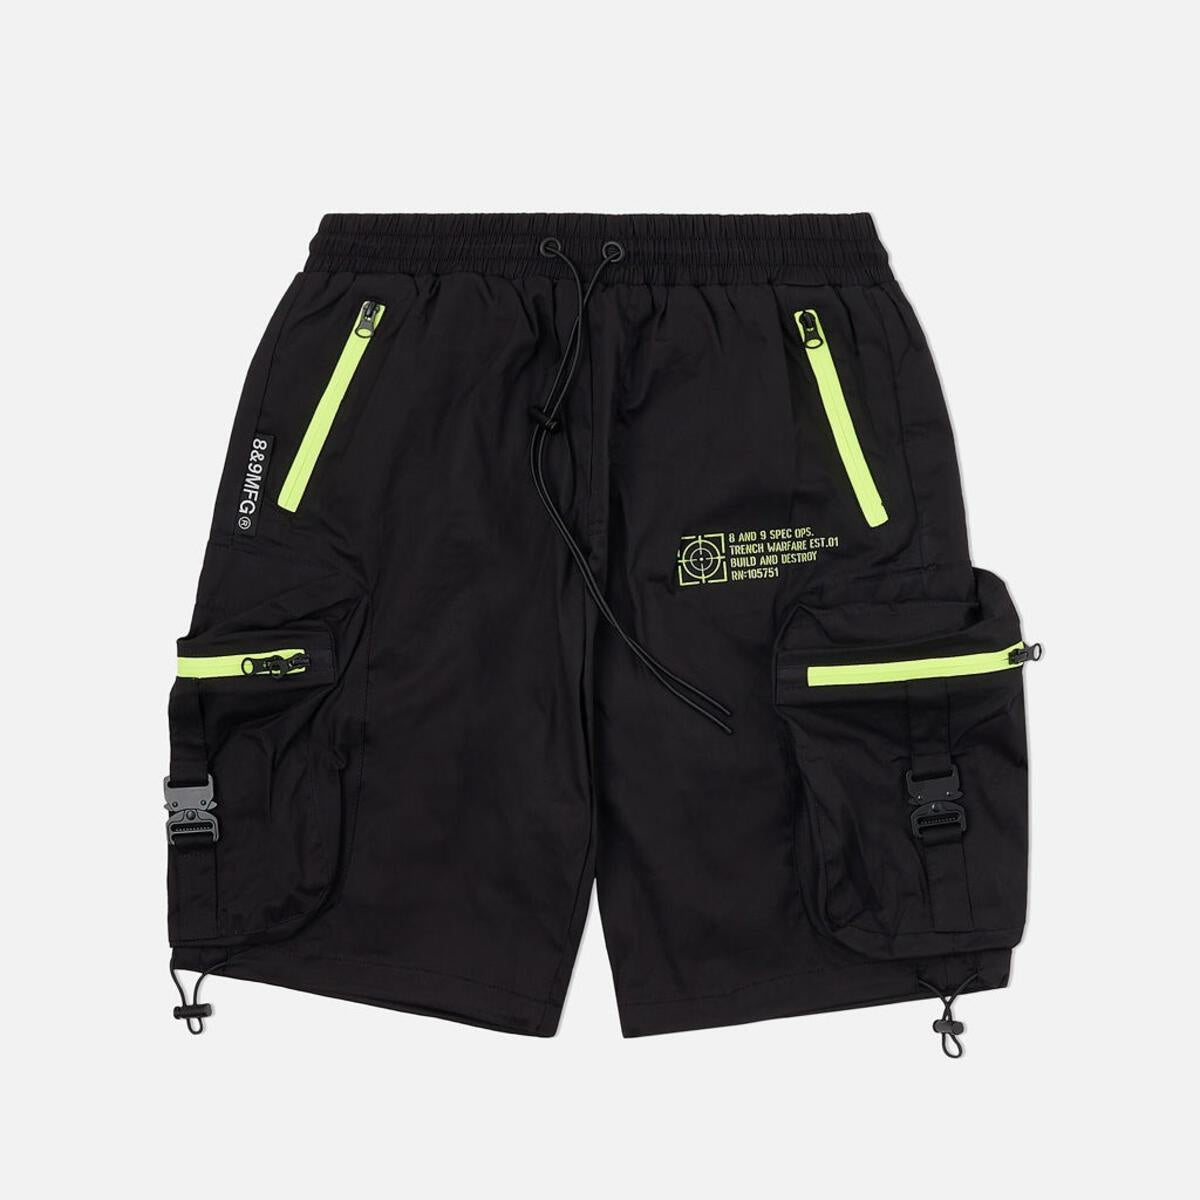 8&9 Black Combat Nylon Shorts w/Volt Zippers (SHCOMPBVLT)